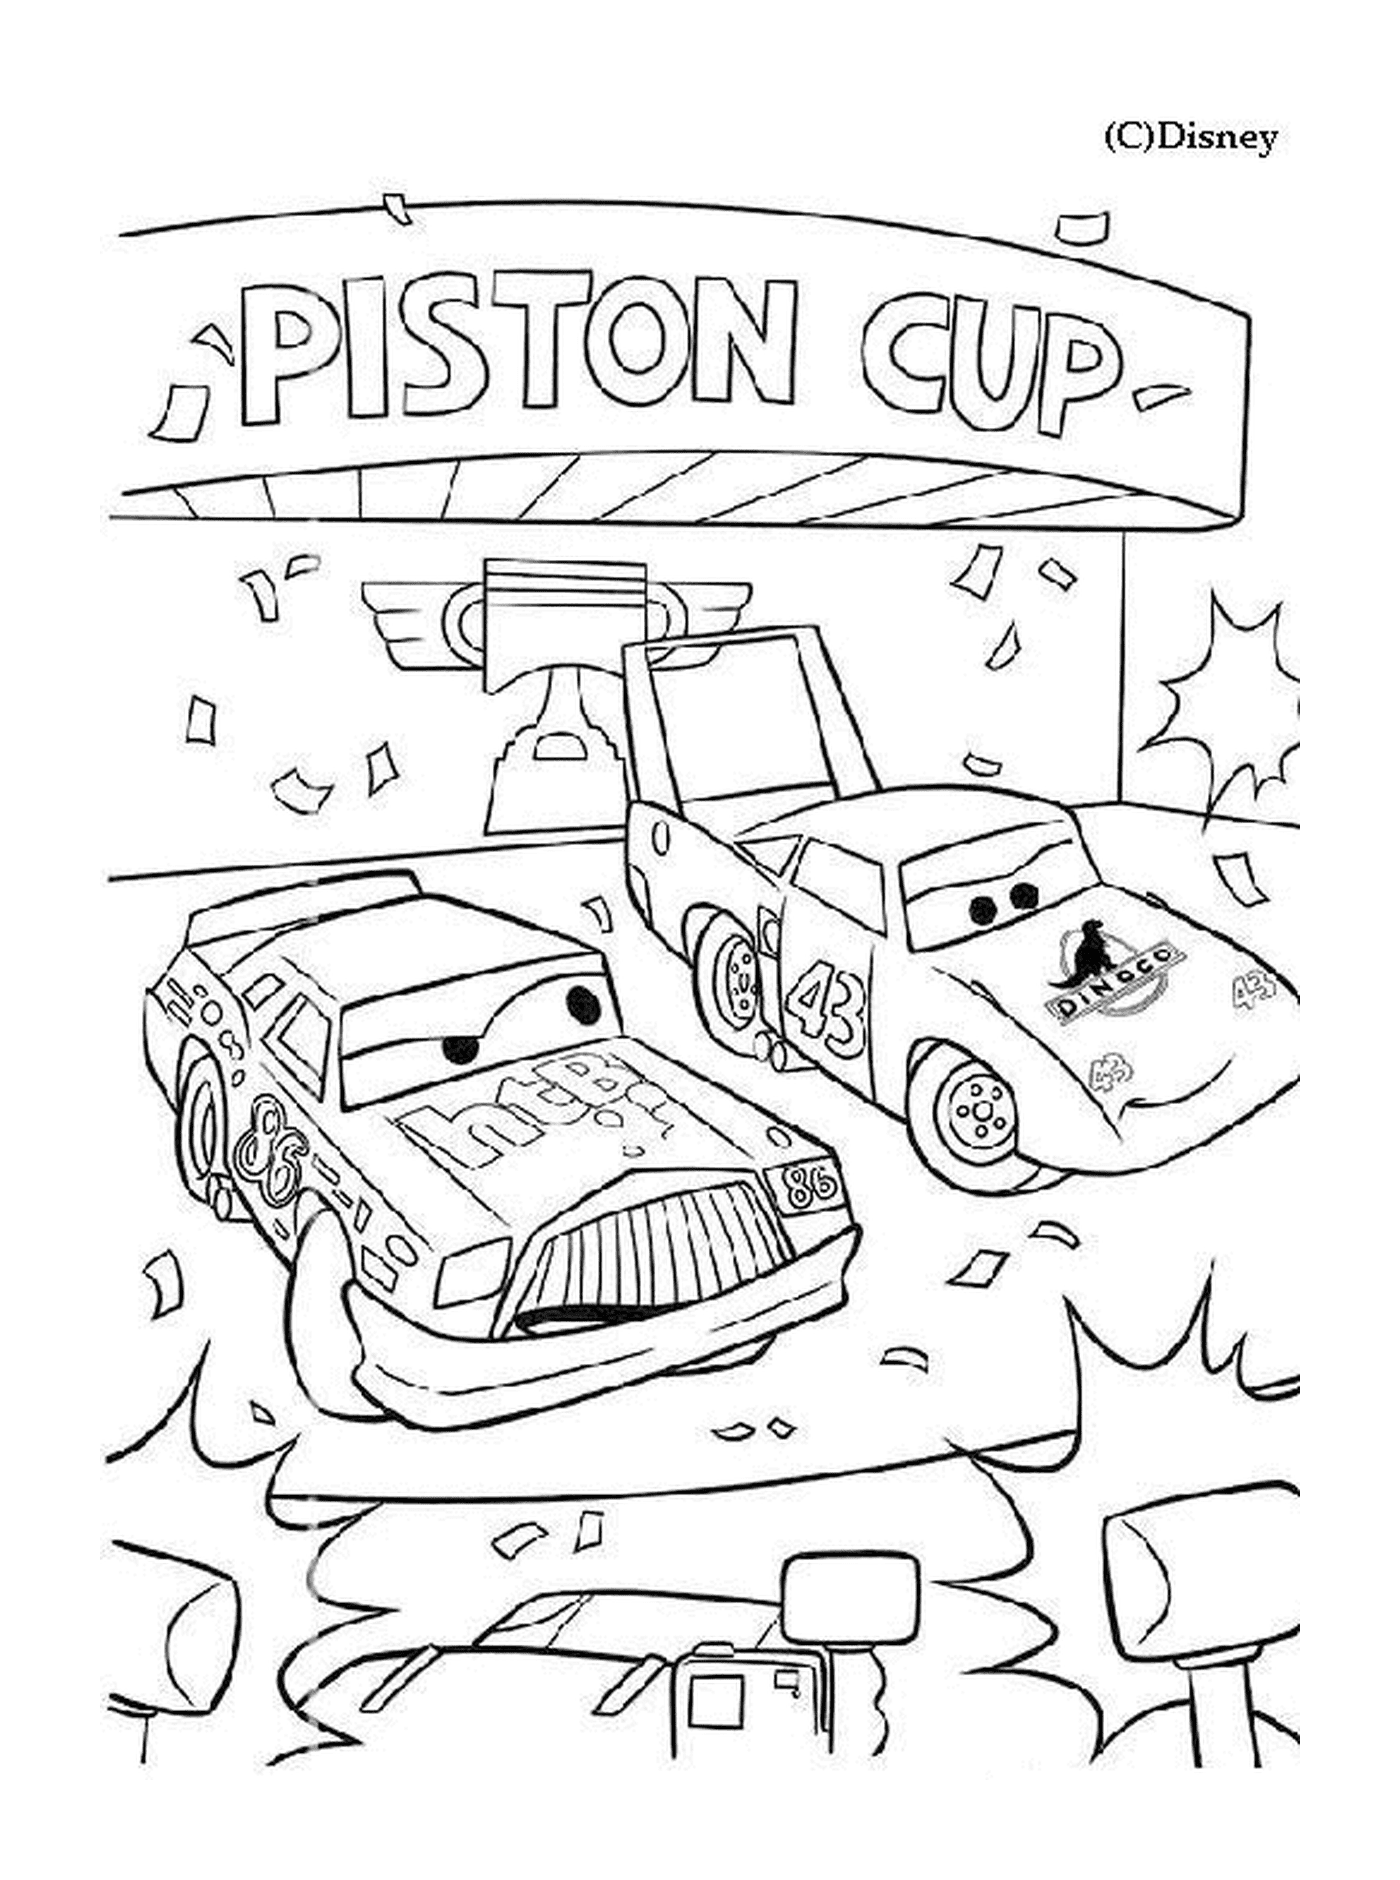  The Piston Cup podium 